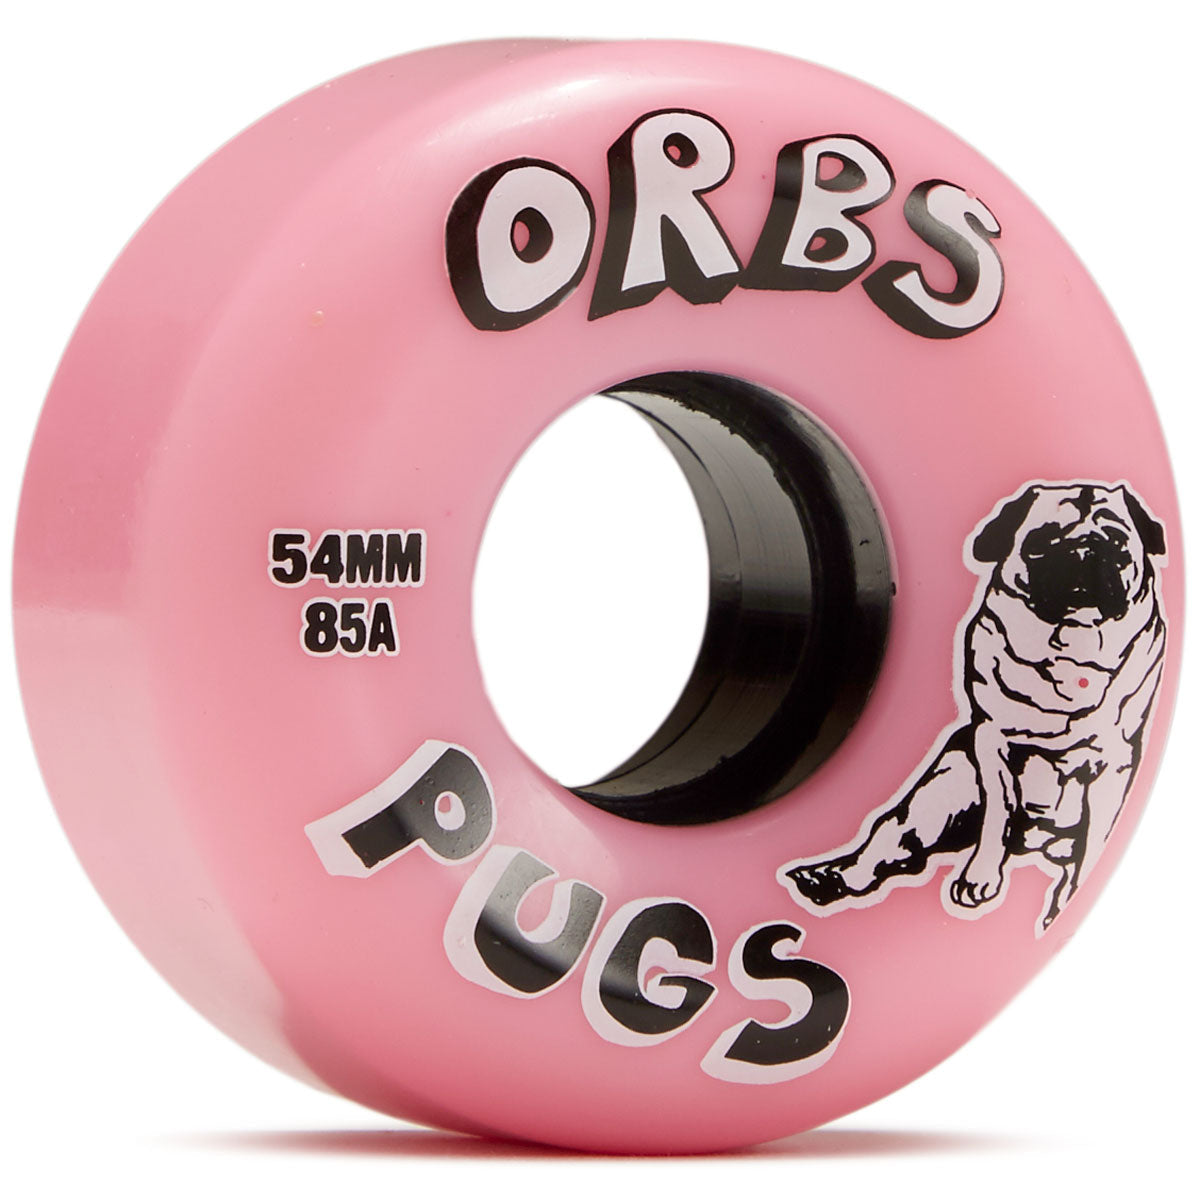 ORBS WHEELS - PUGS 85A PINK (54MM)